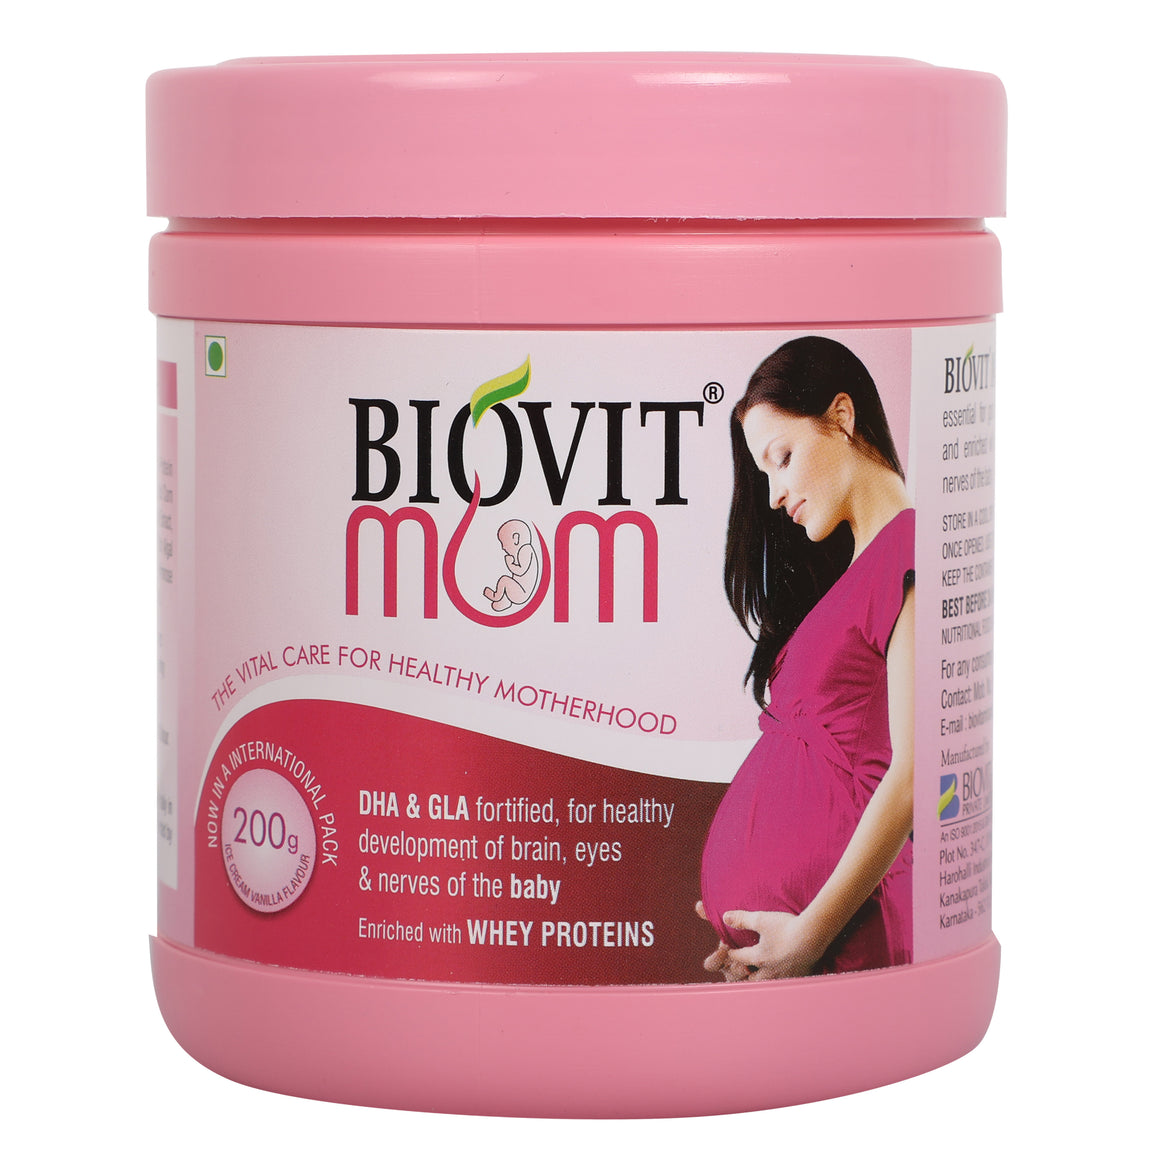 BIOVIT MOM POWDER- Vital Care for Healthy Motherhood.